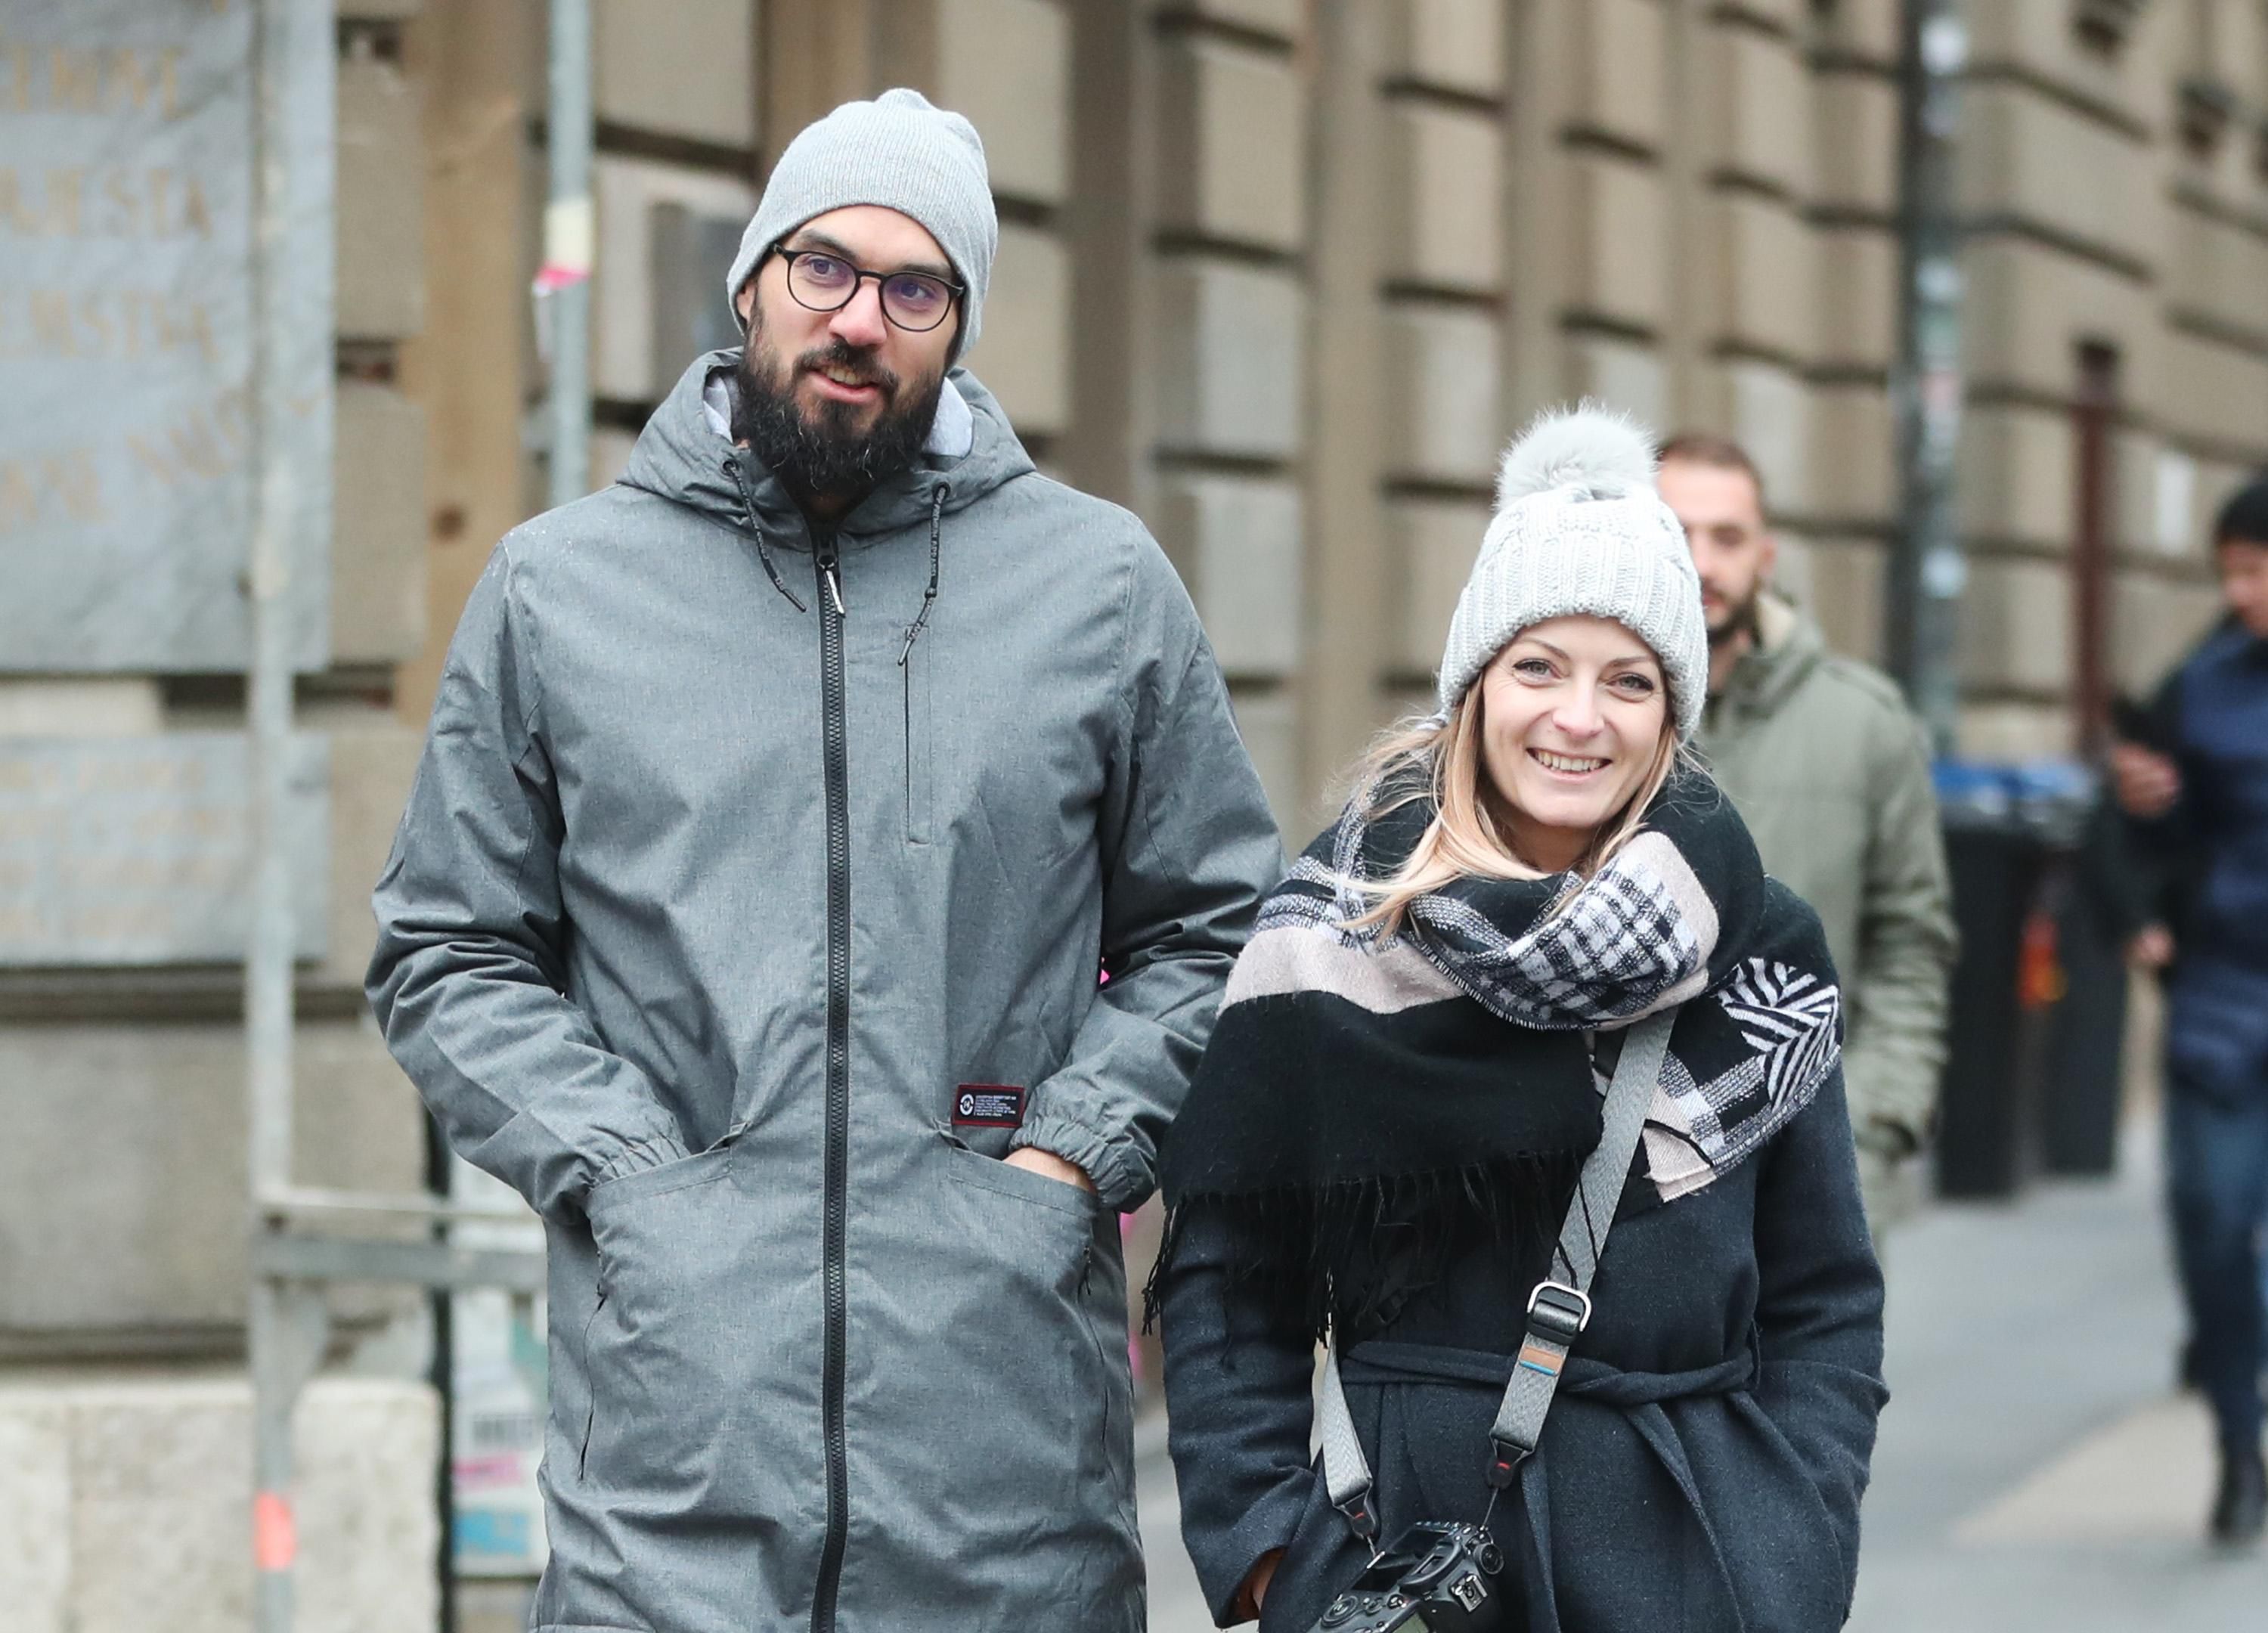 Topli šal i cool kapa: Ovaj dvojac iz centra zna kako se na stylish način boriti protiv hladnoće